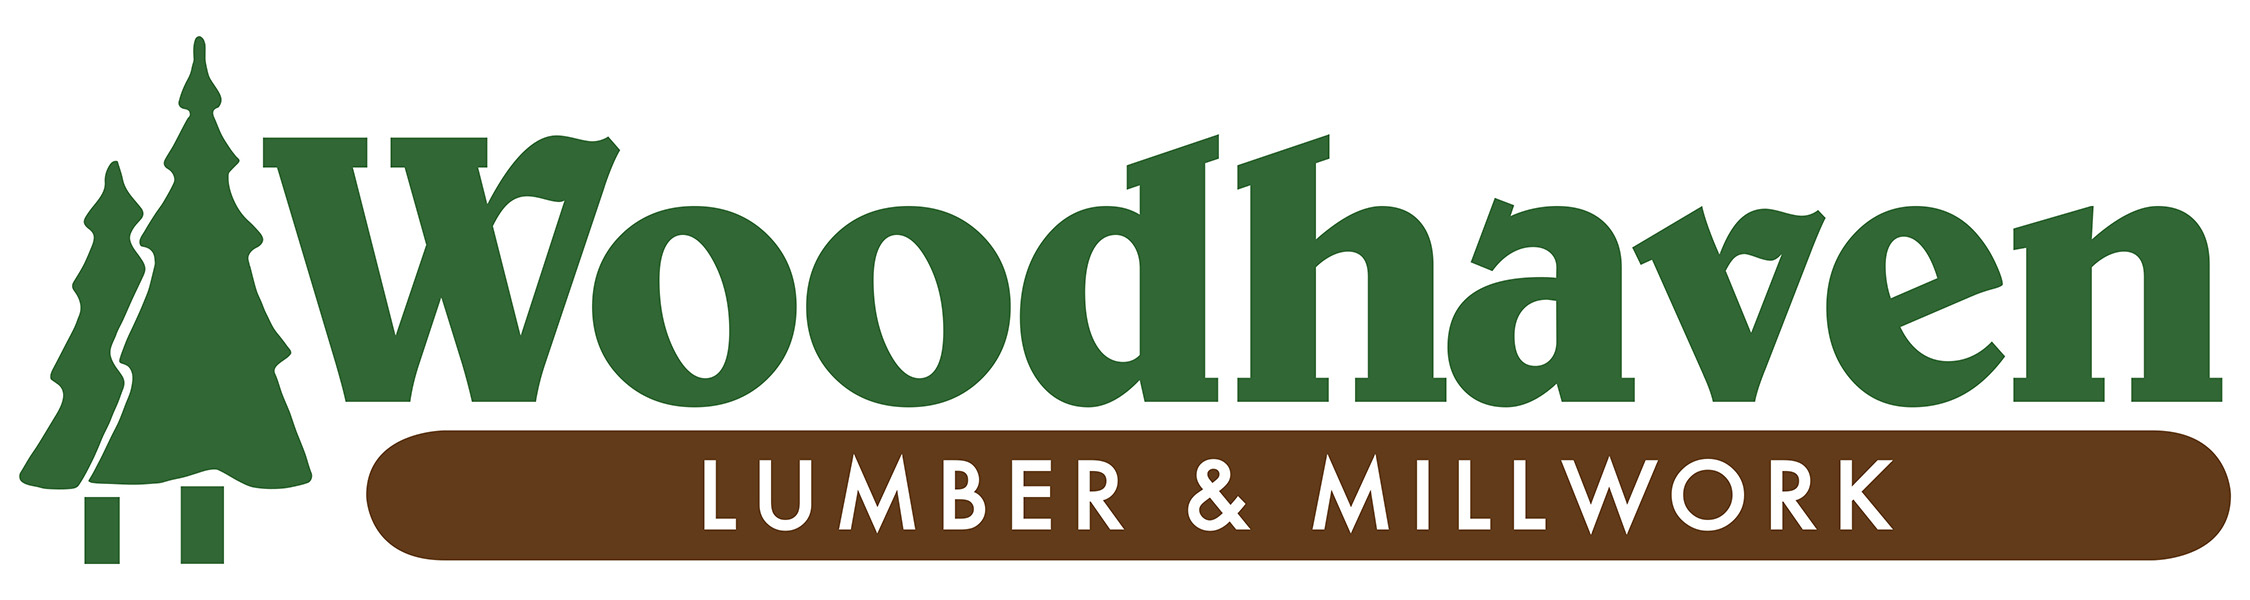 Woodhaven Lumber & Millwork - Manahawkin logo